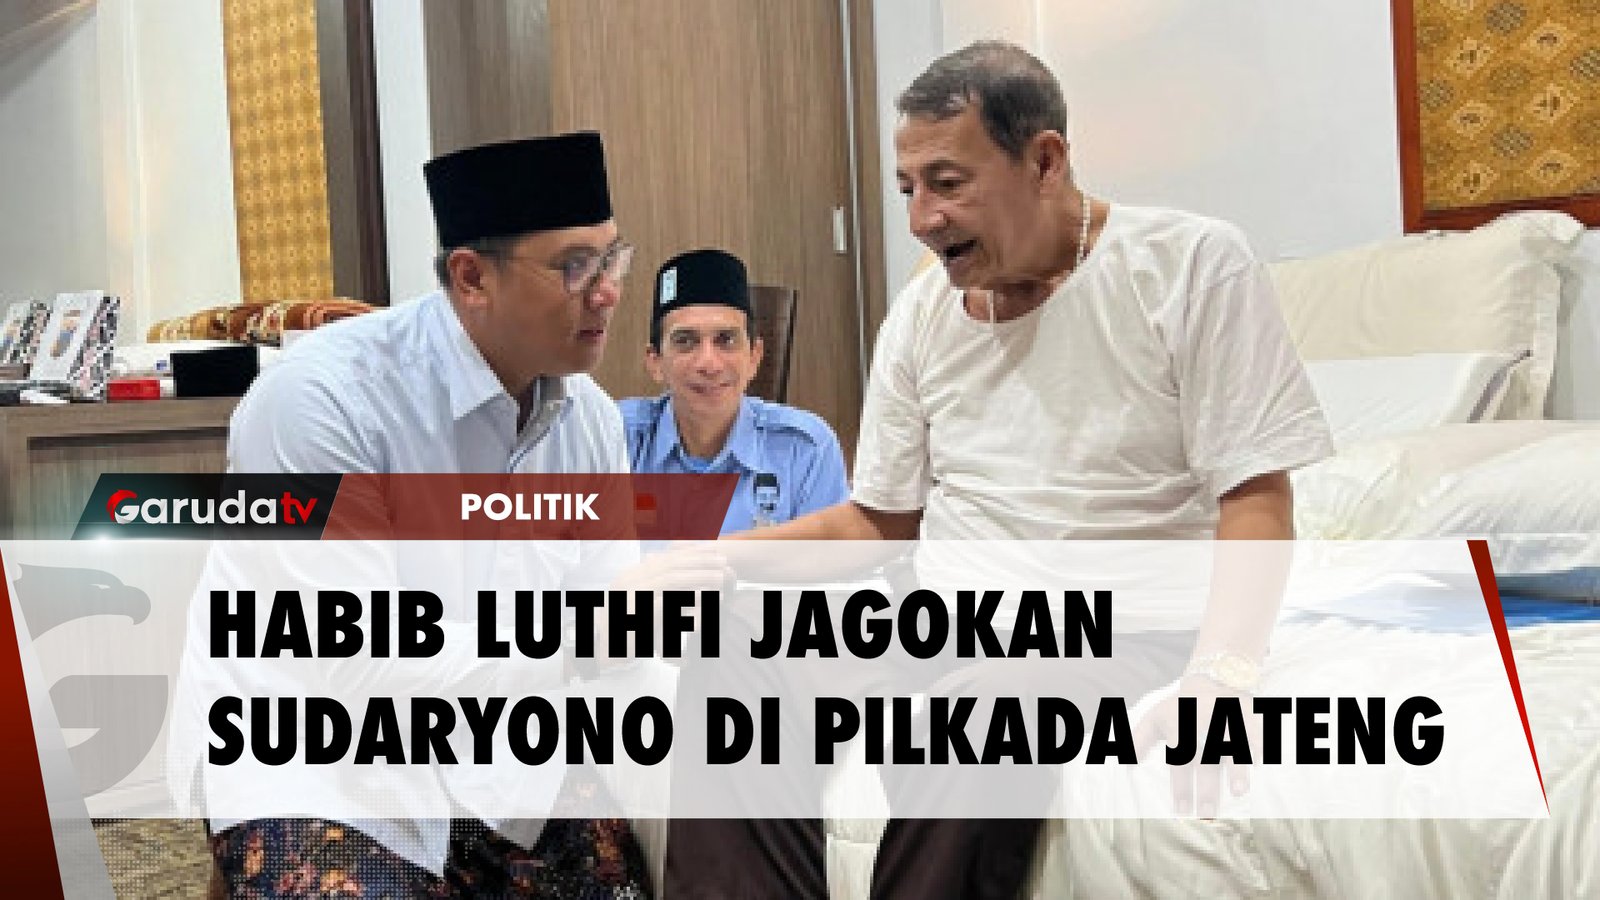 Jelang Pilkada Jateng, Habib Luthfi Jagokan Sudaryono